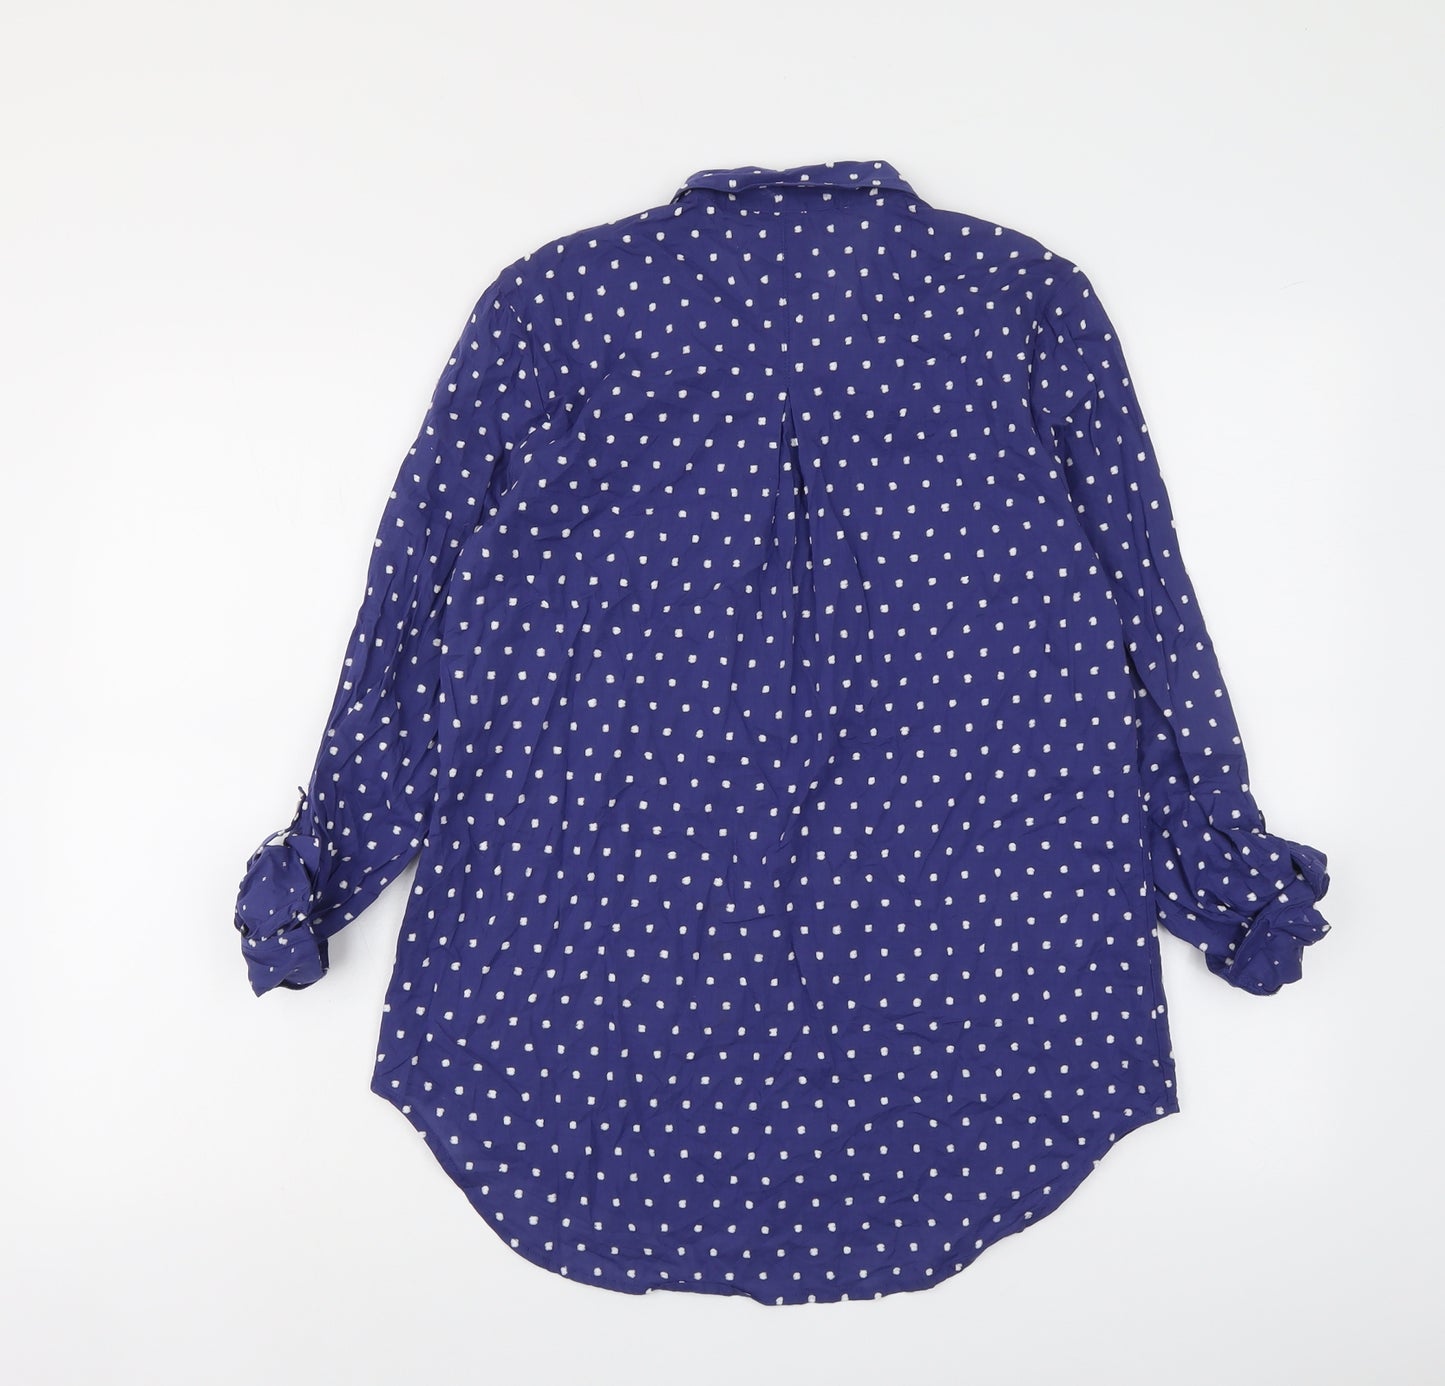 Kew 159 Womens Blue Polka Dot Cotton Basic Button-Up Size 12 Collared